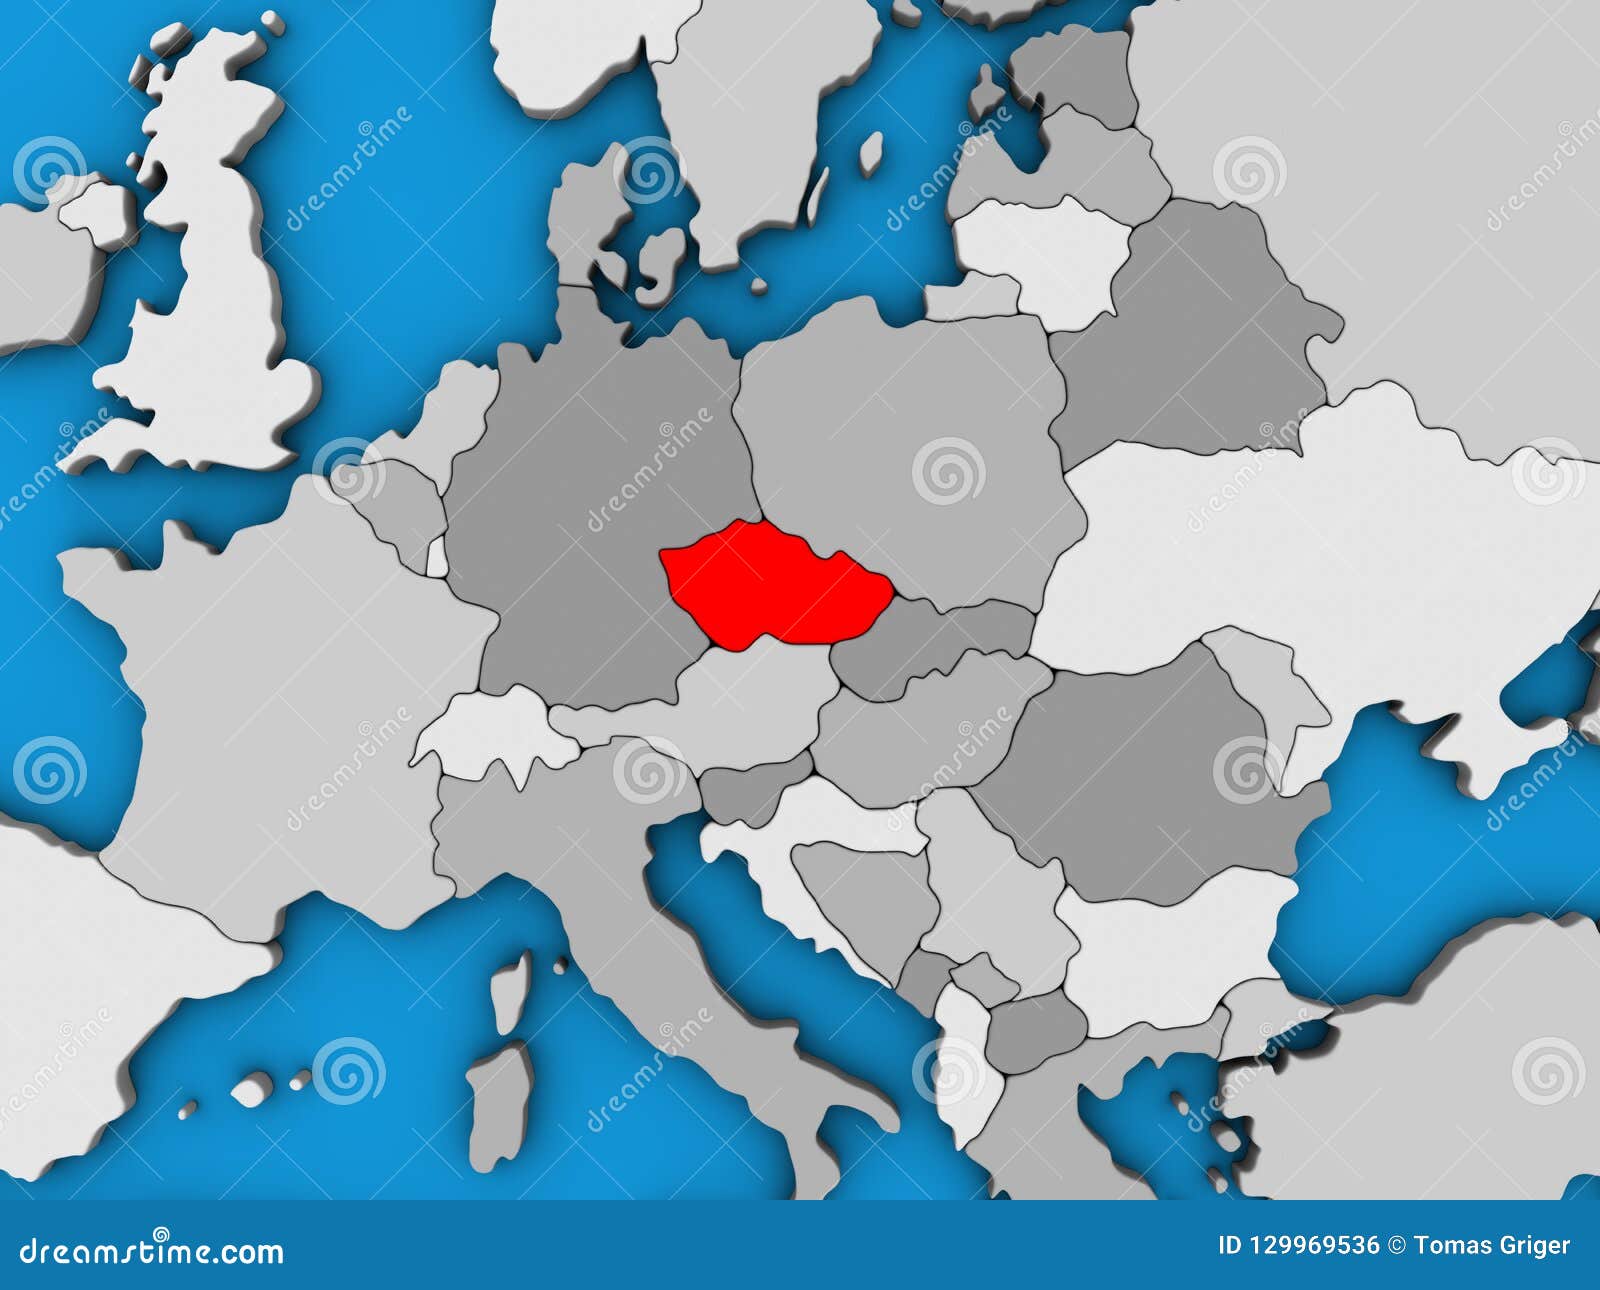 Czech Republic On D Map Stock Illustration Illustration Of Europe